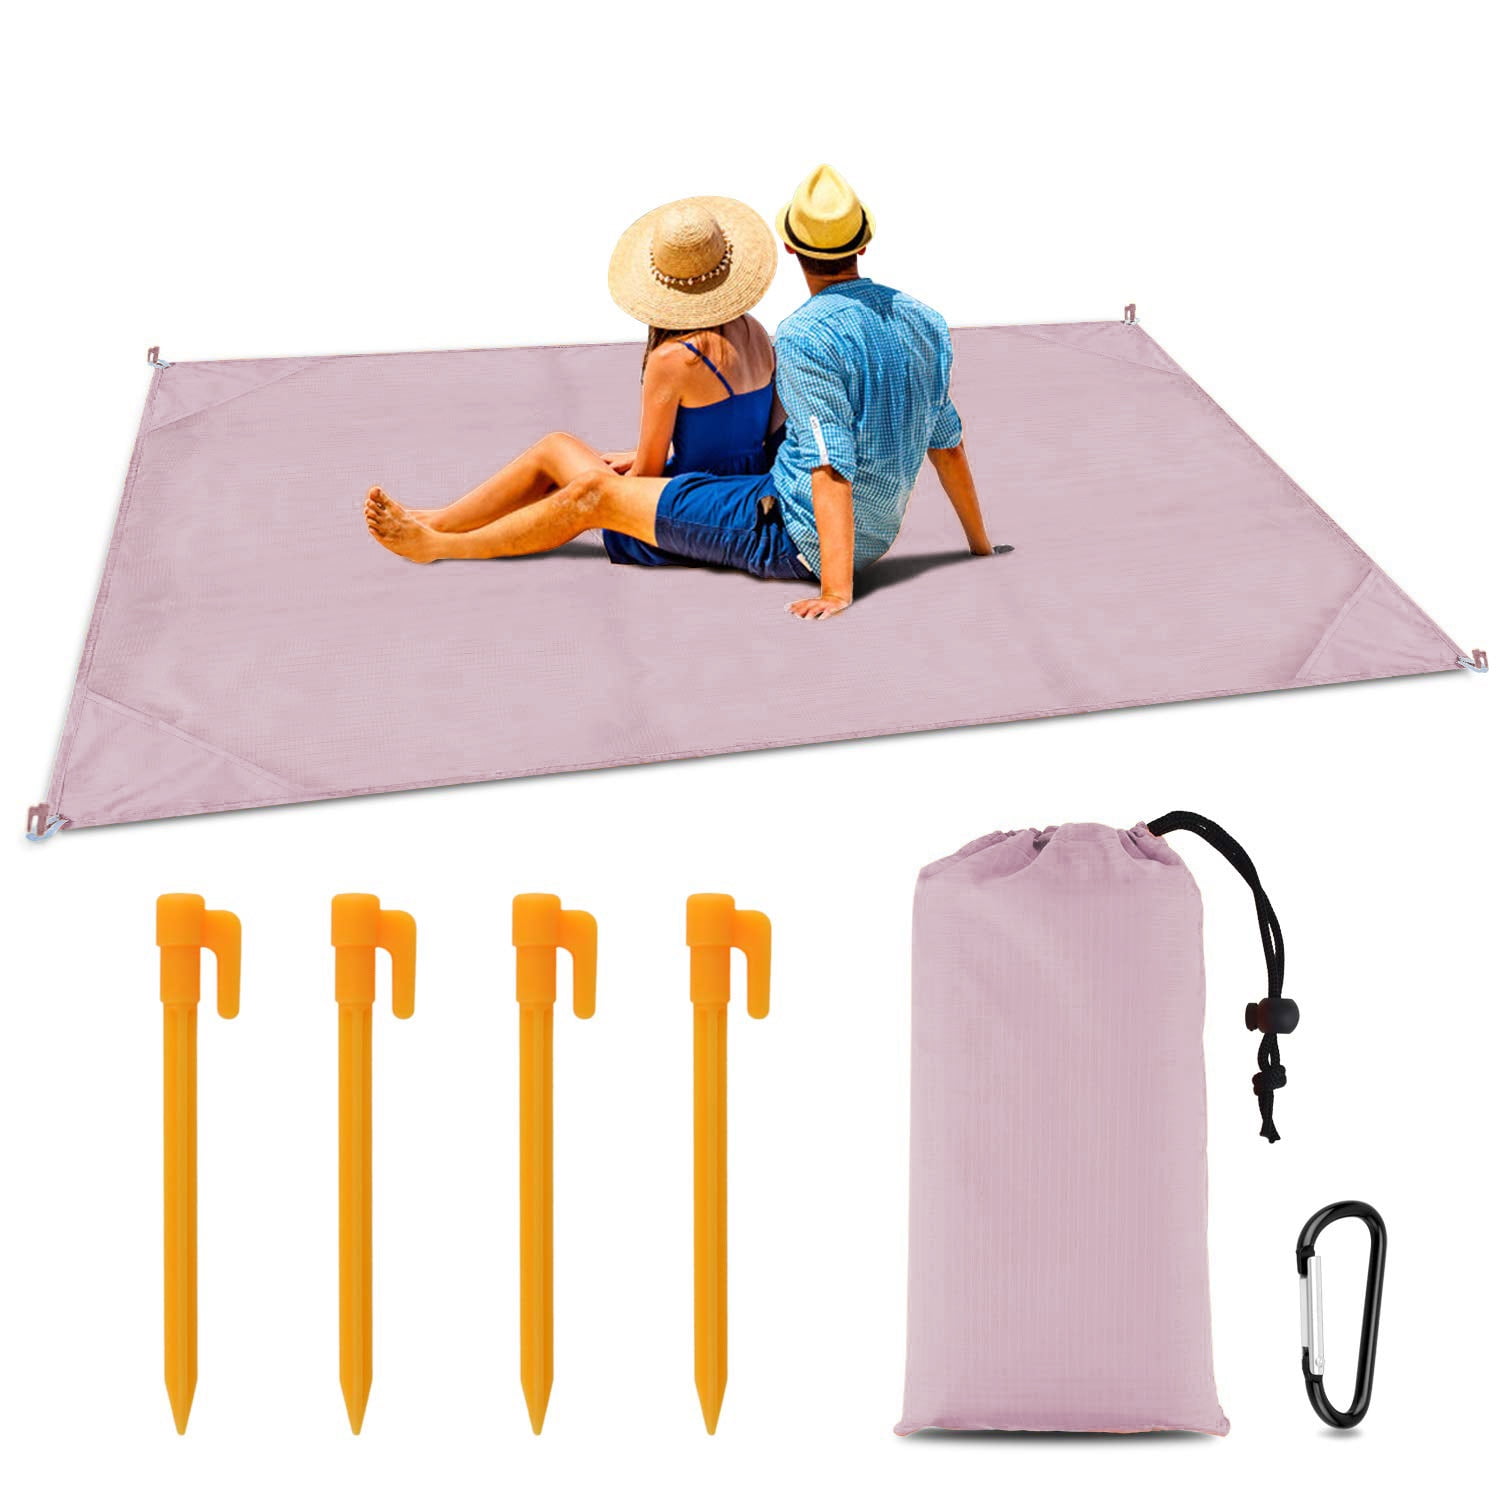 2M Waterproof Picnic Blanket Outdoor Travel Beach Camping Rug Mat Sheet 3 Layers 